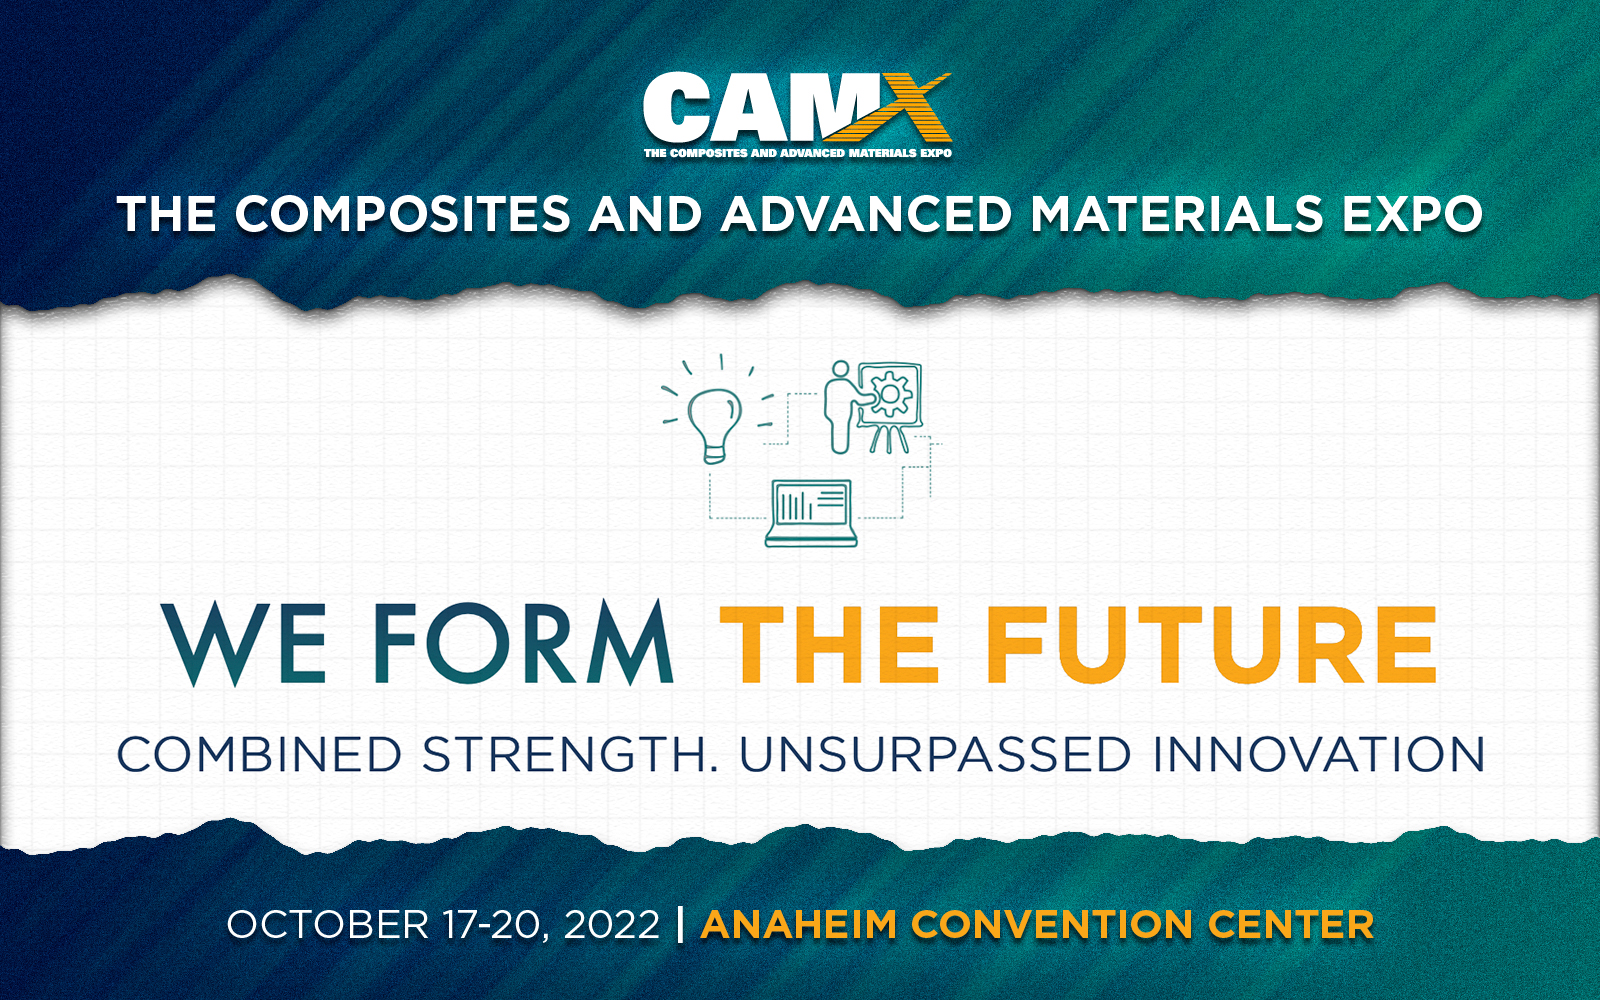 CAMX 2022 in Anaheim, CA Hadland Imaging